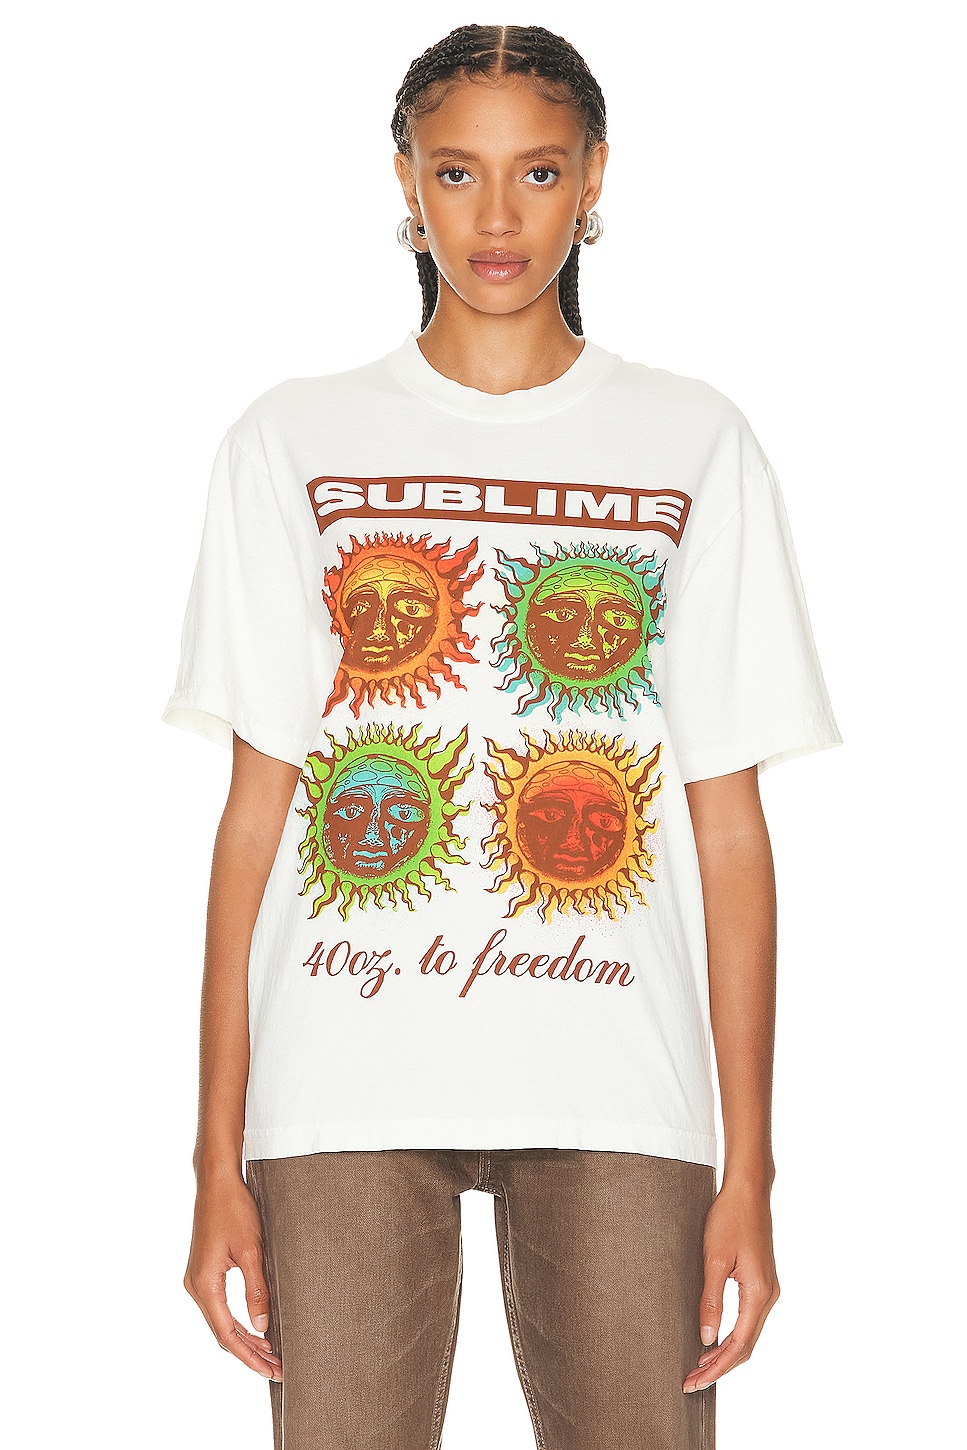 Sublime Sun Grid T-shirt in Cream